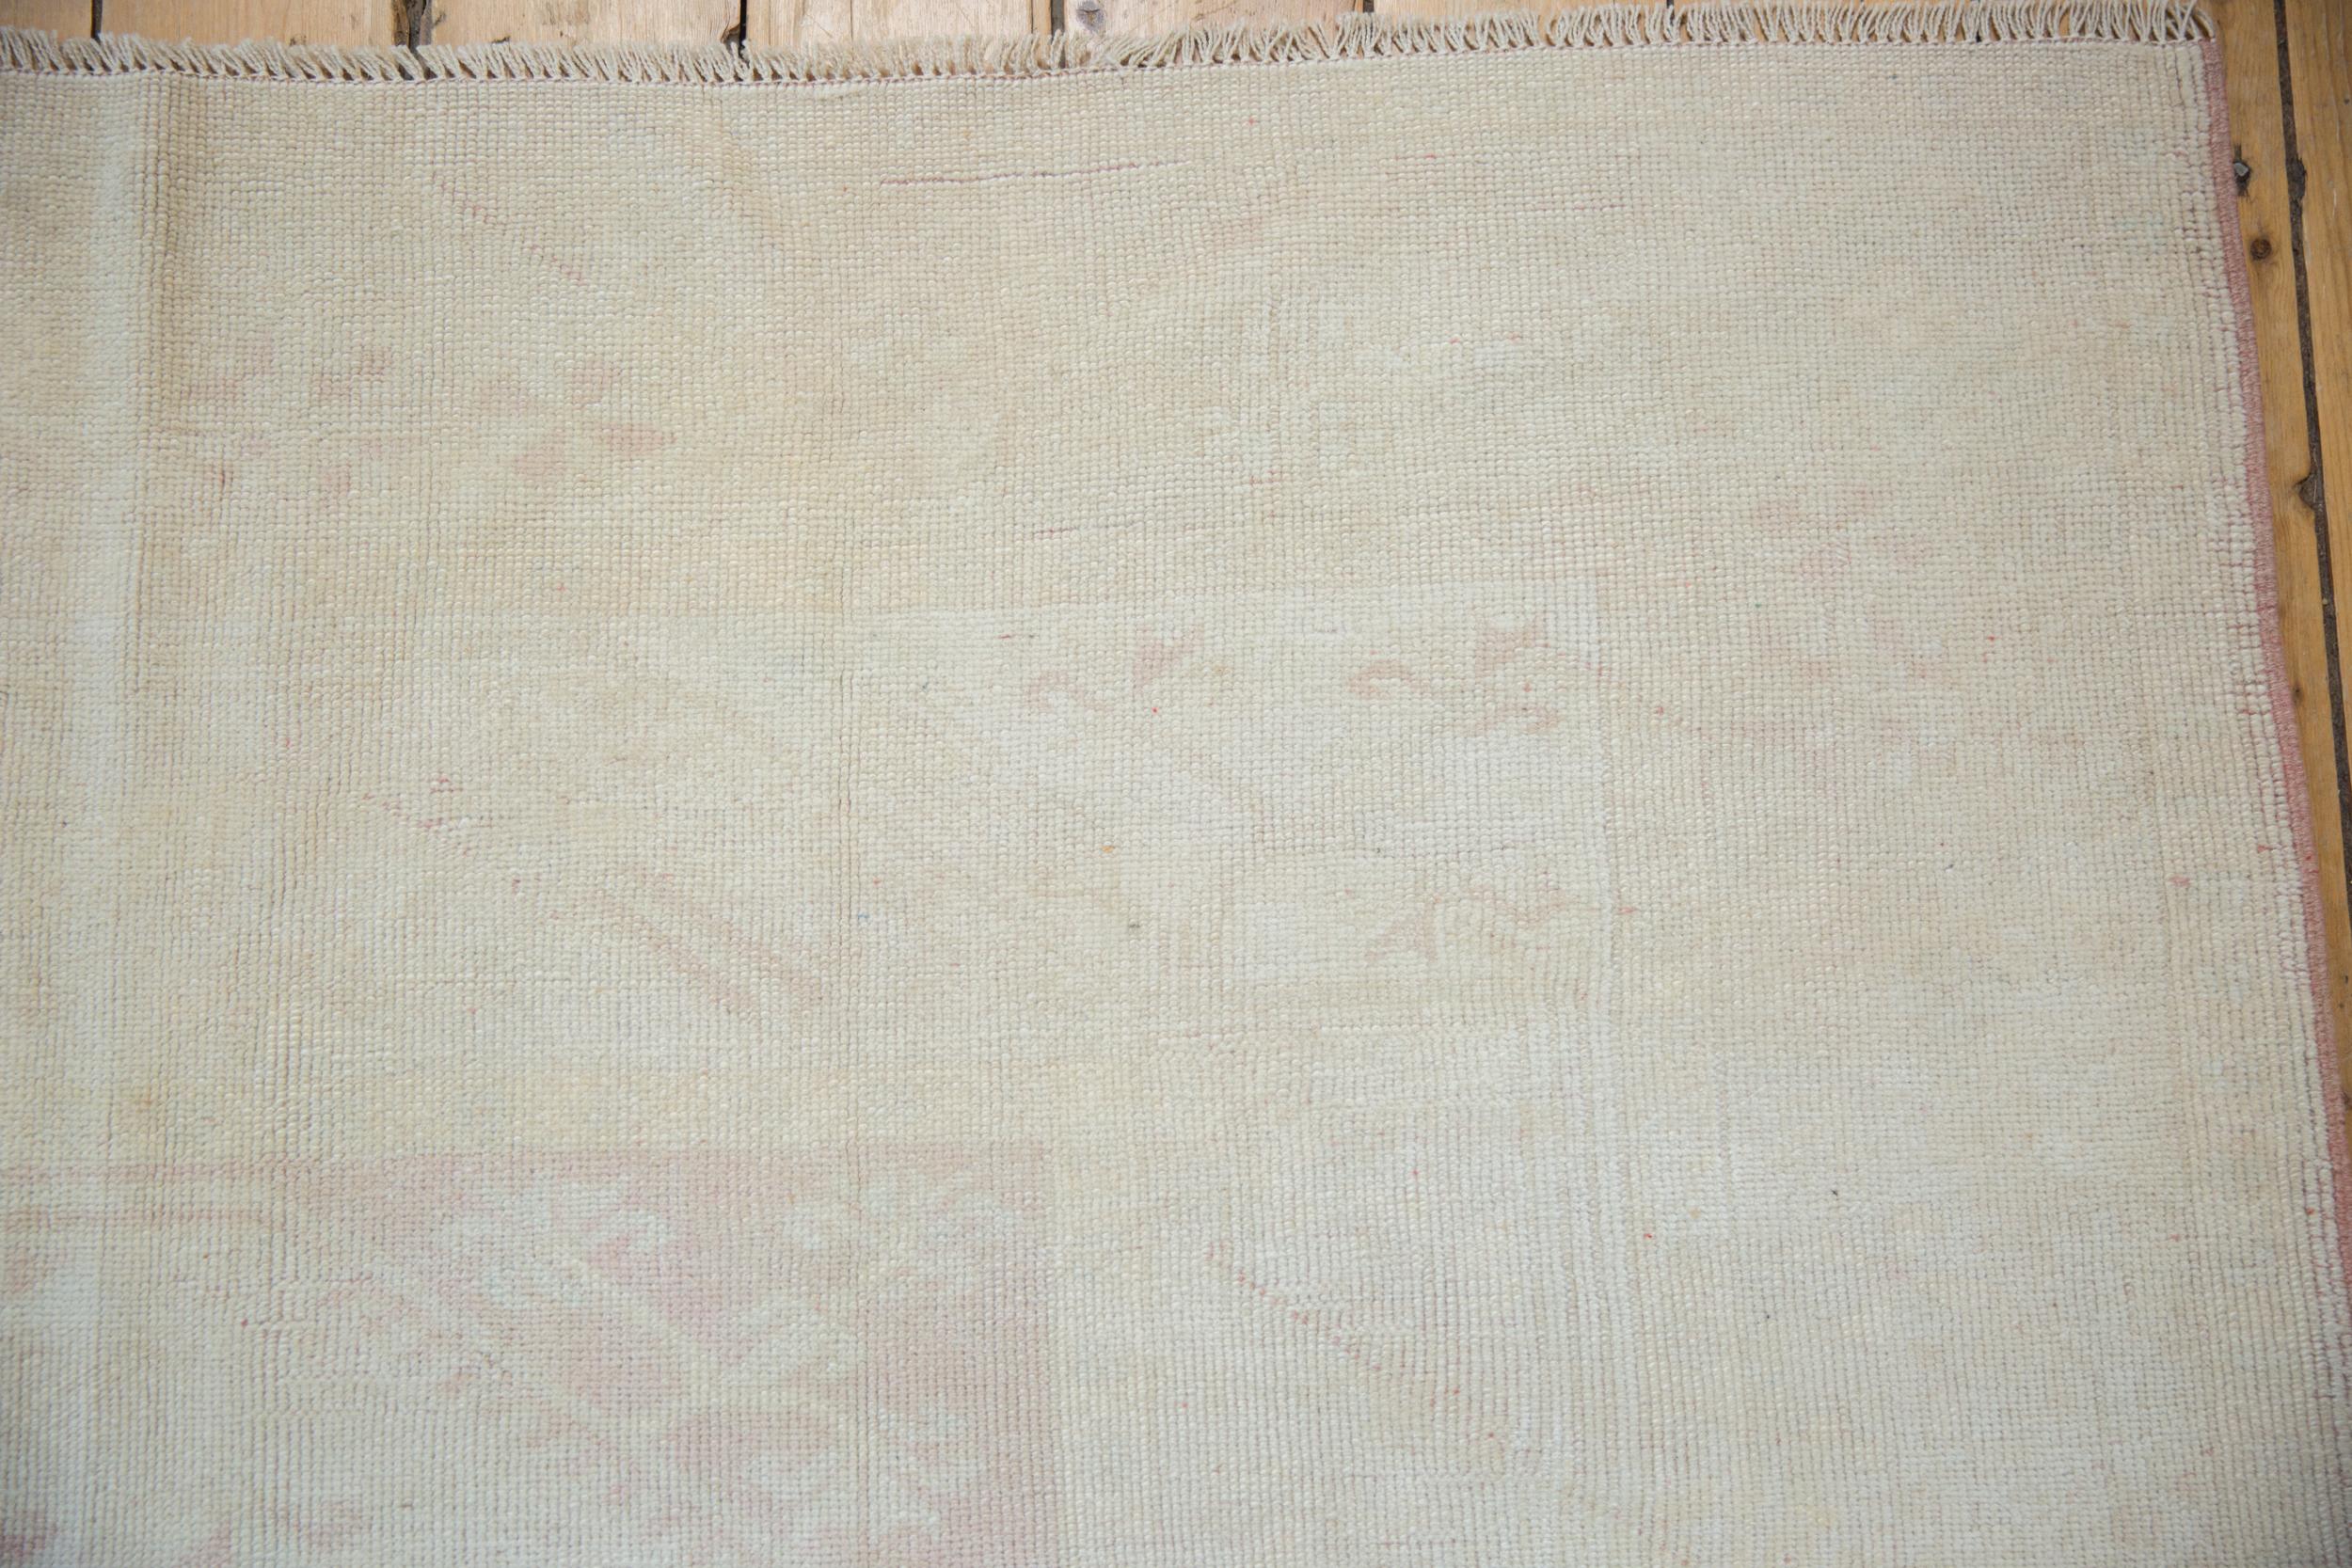 Other Vintage Distressed Dosemealti Carpet For Sale